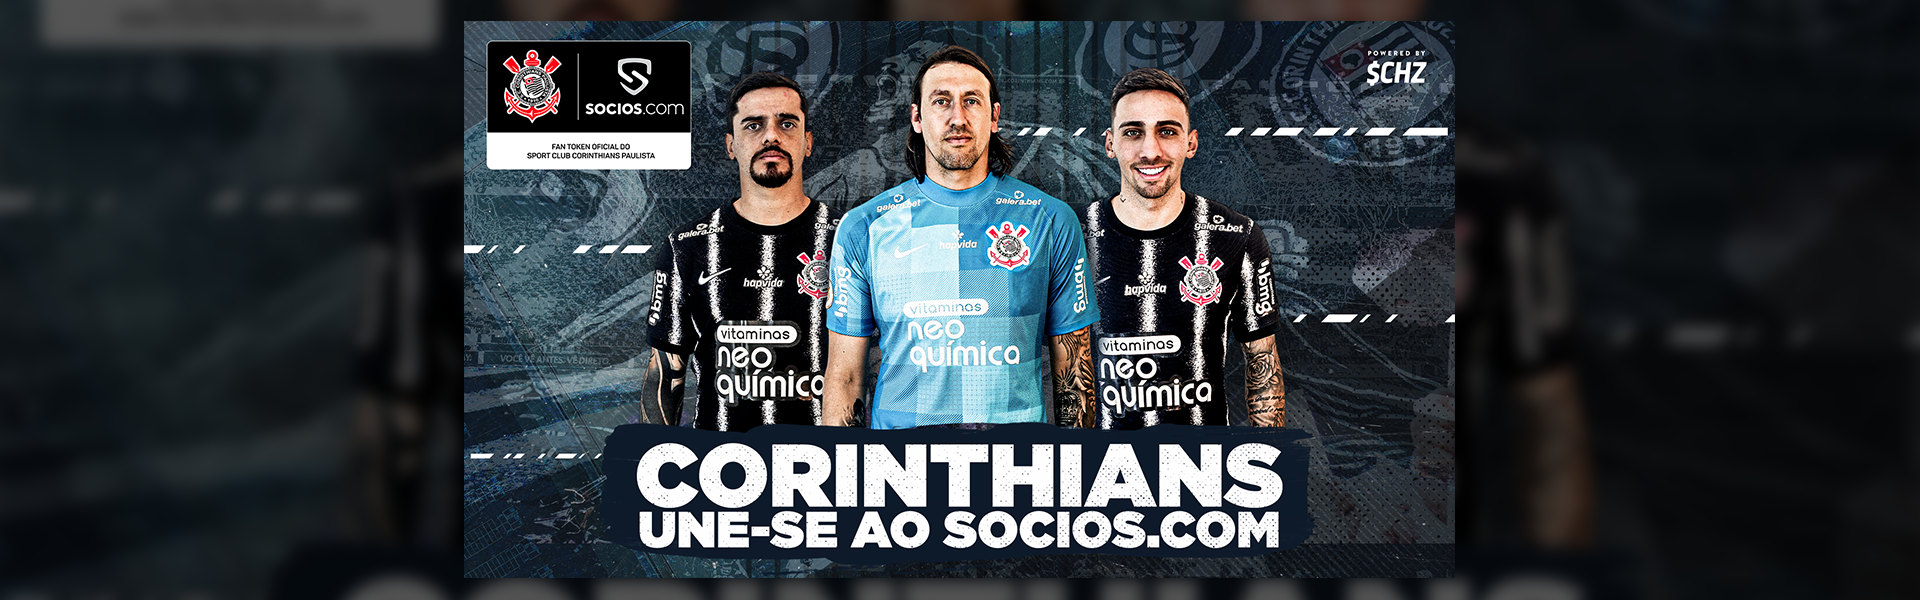 corinthians #sccp #futebol #tiktokesportes #futebolbrasileiro #duilio